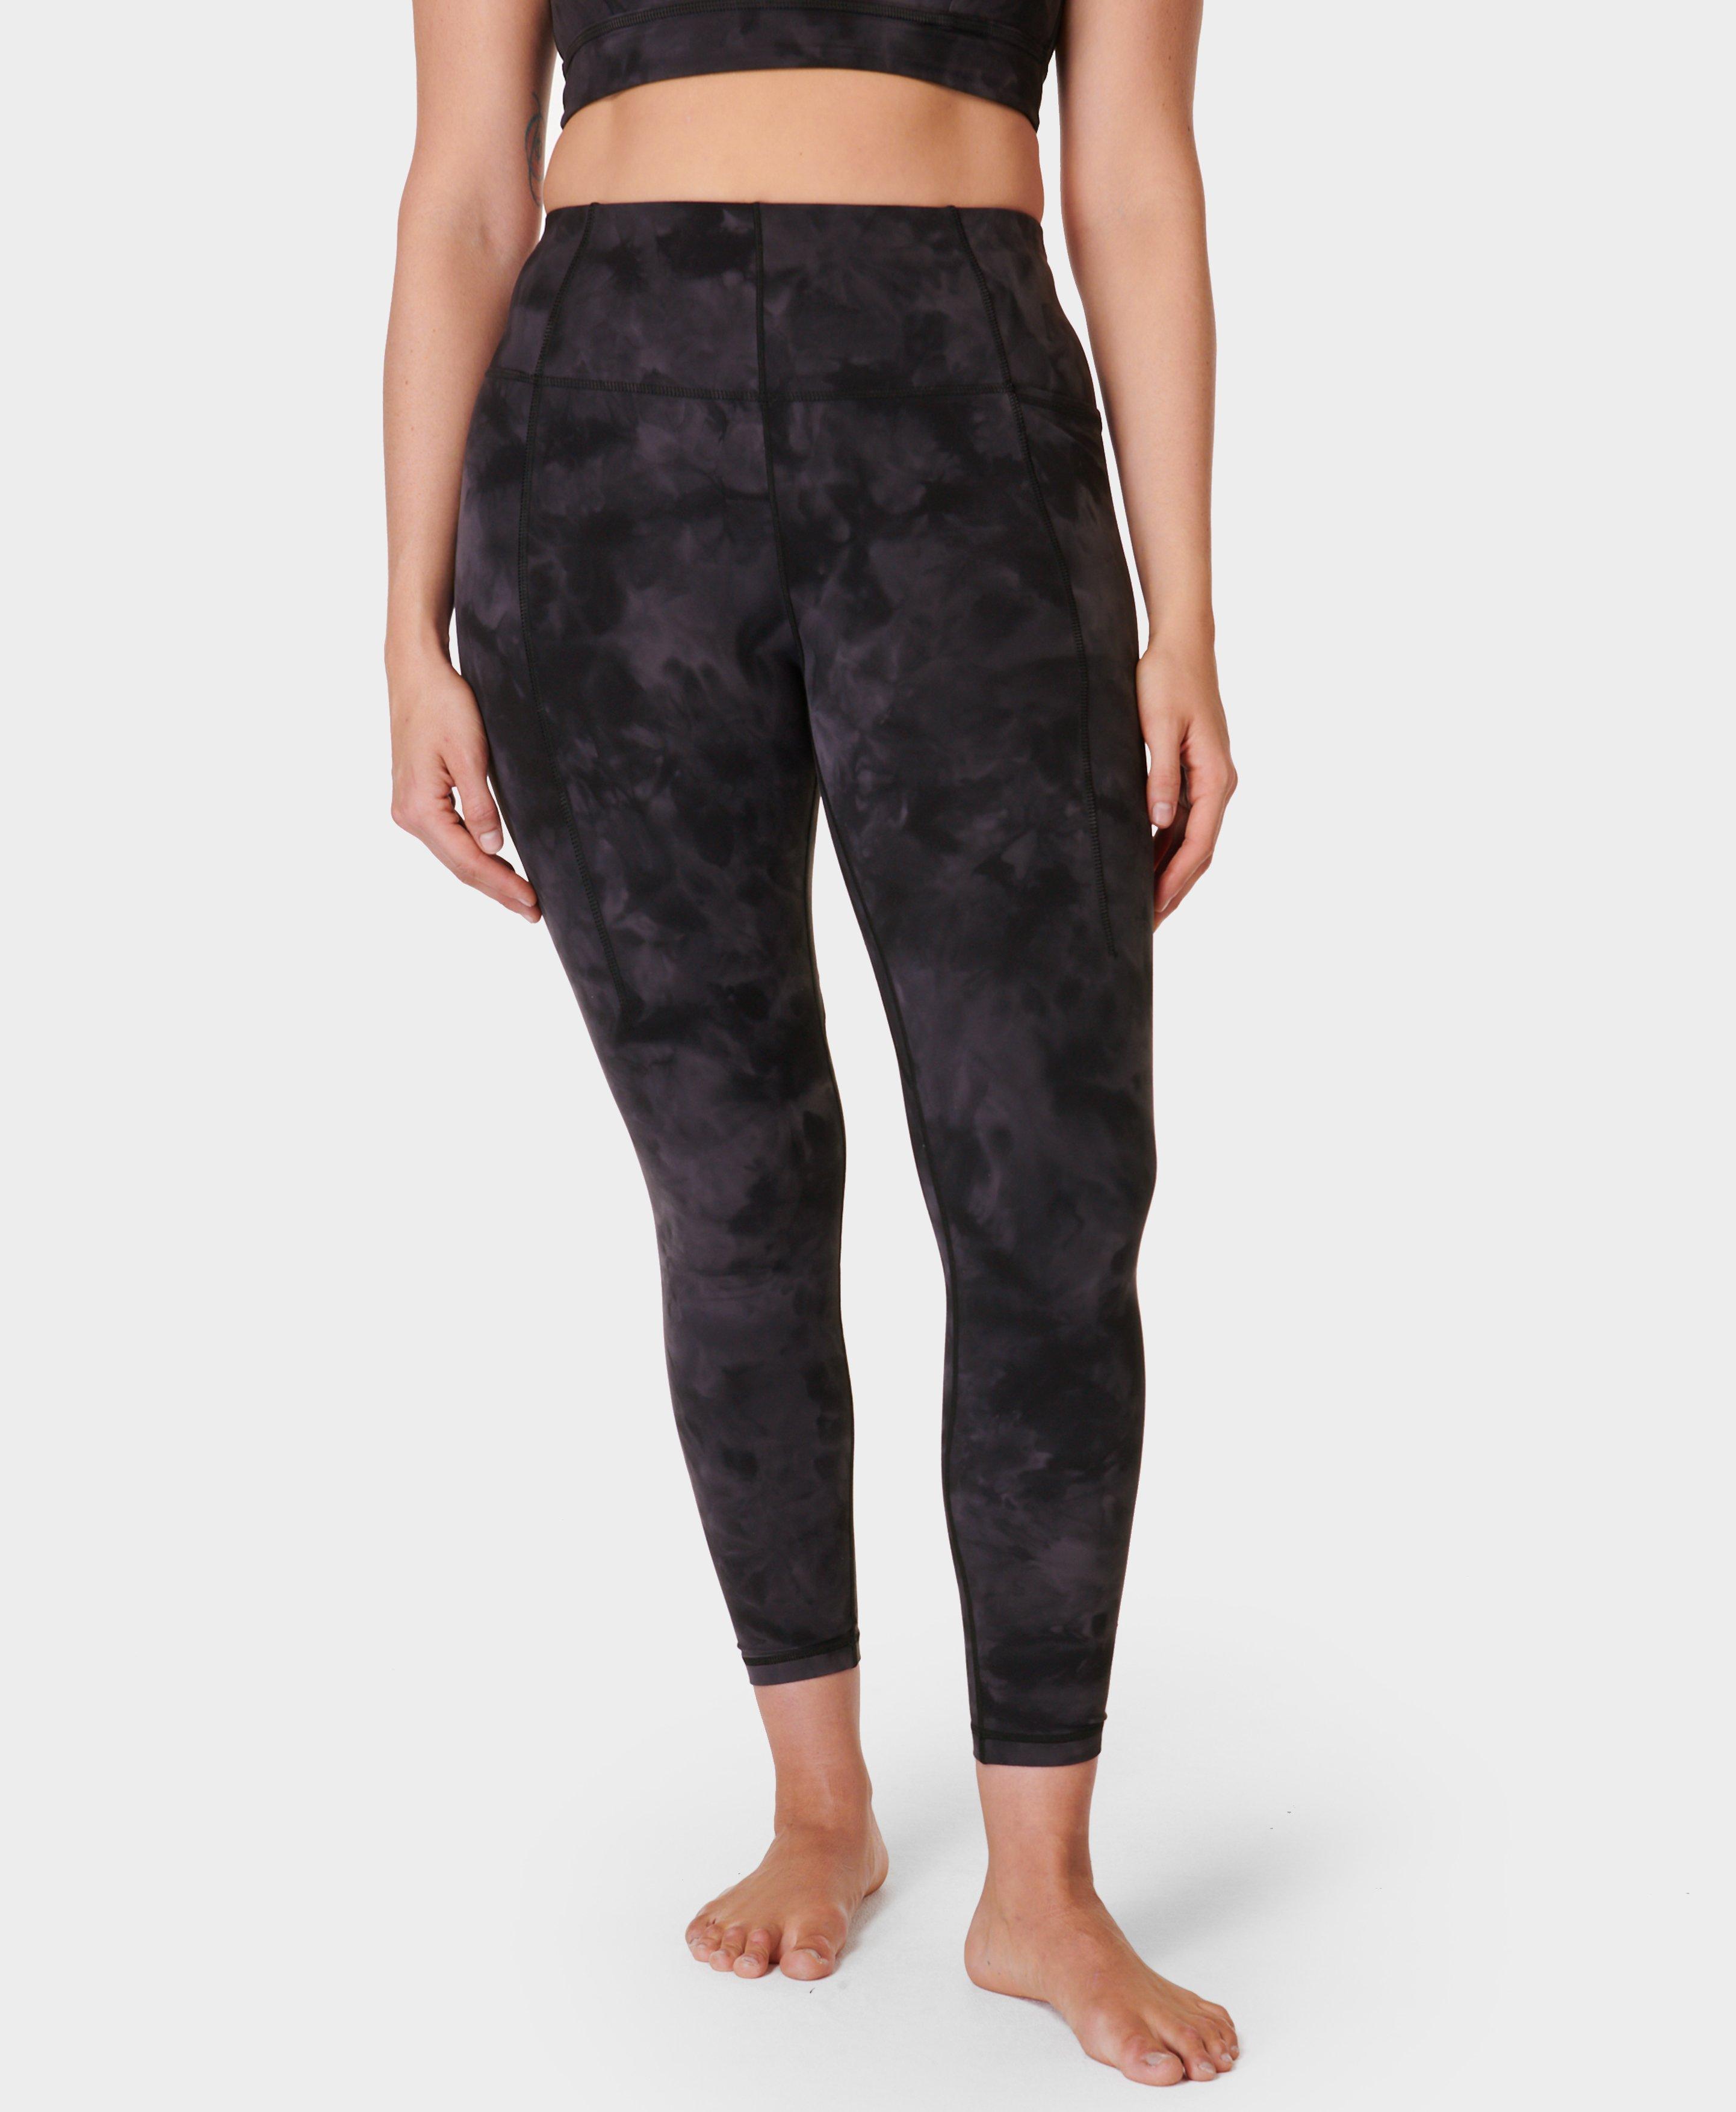 Super Soft 7/8 Yoga Leggings - Black Spray Dye Print